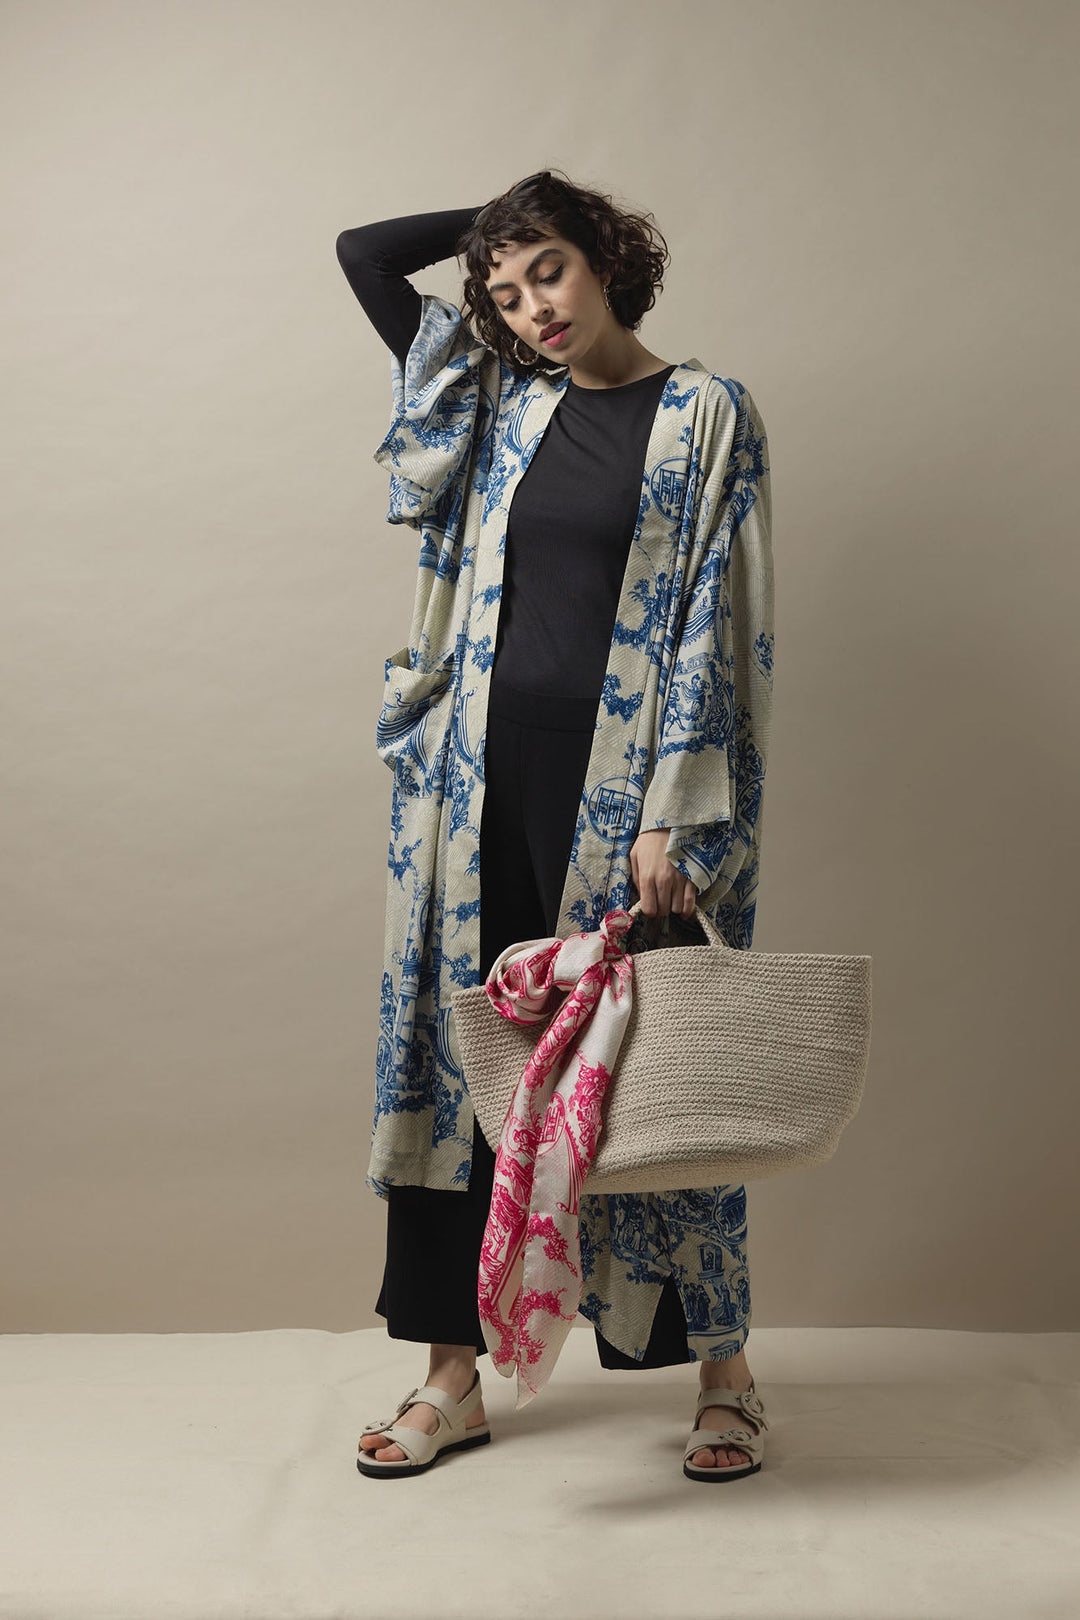 Blue and white vintage inspired long kimono